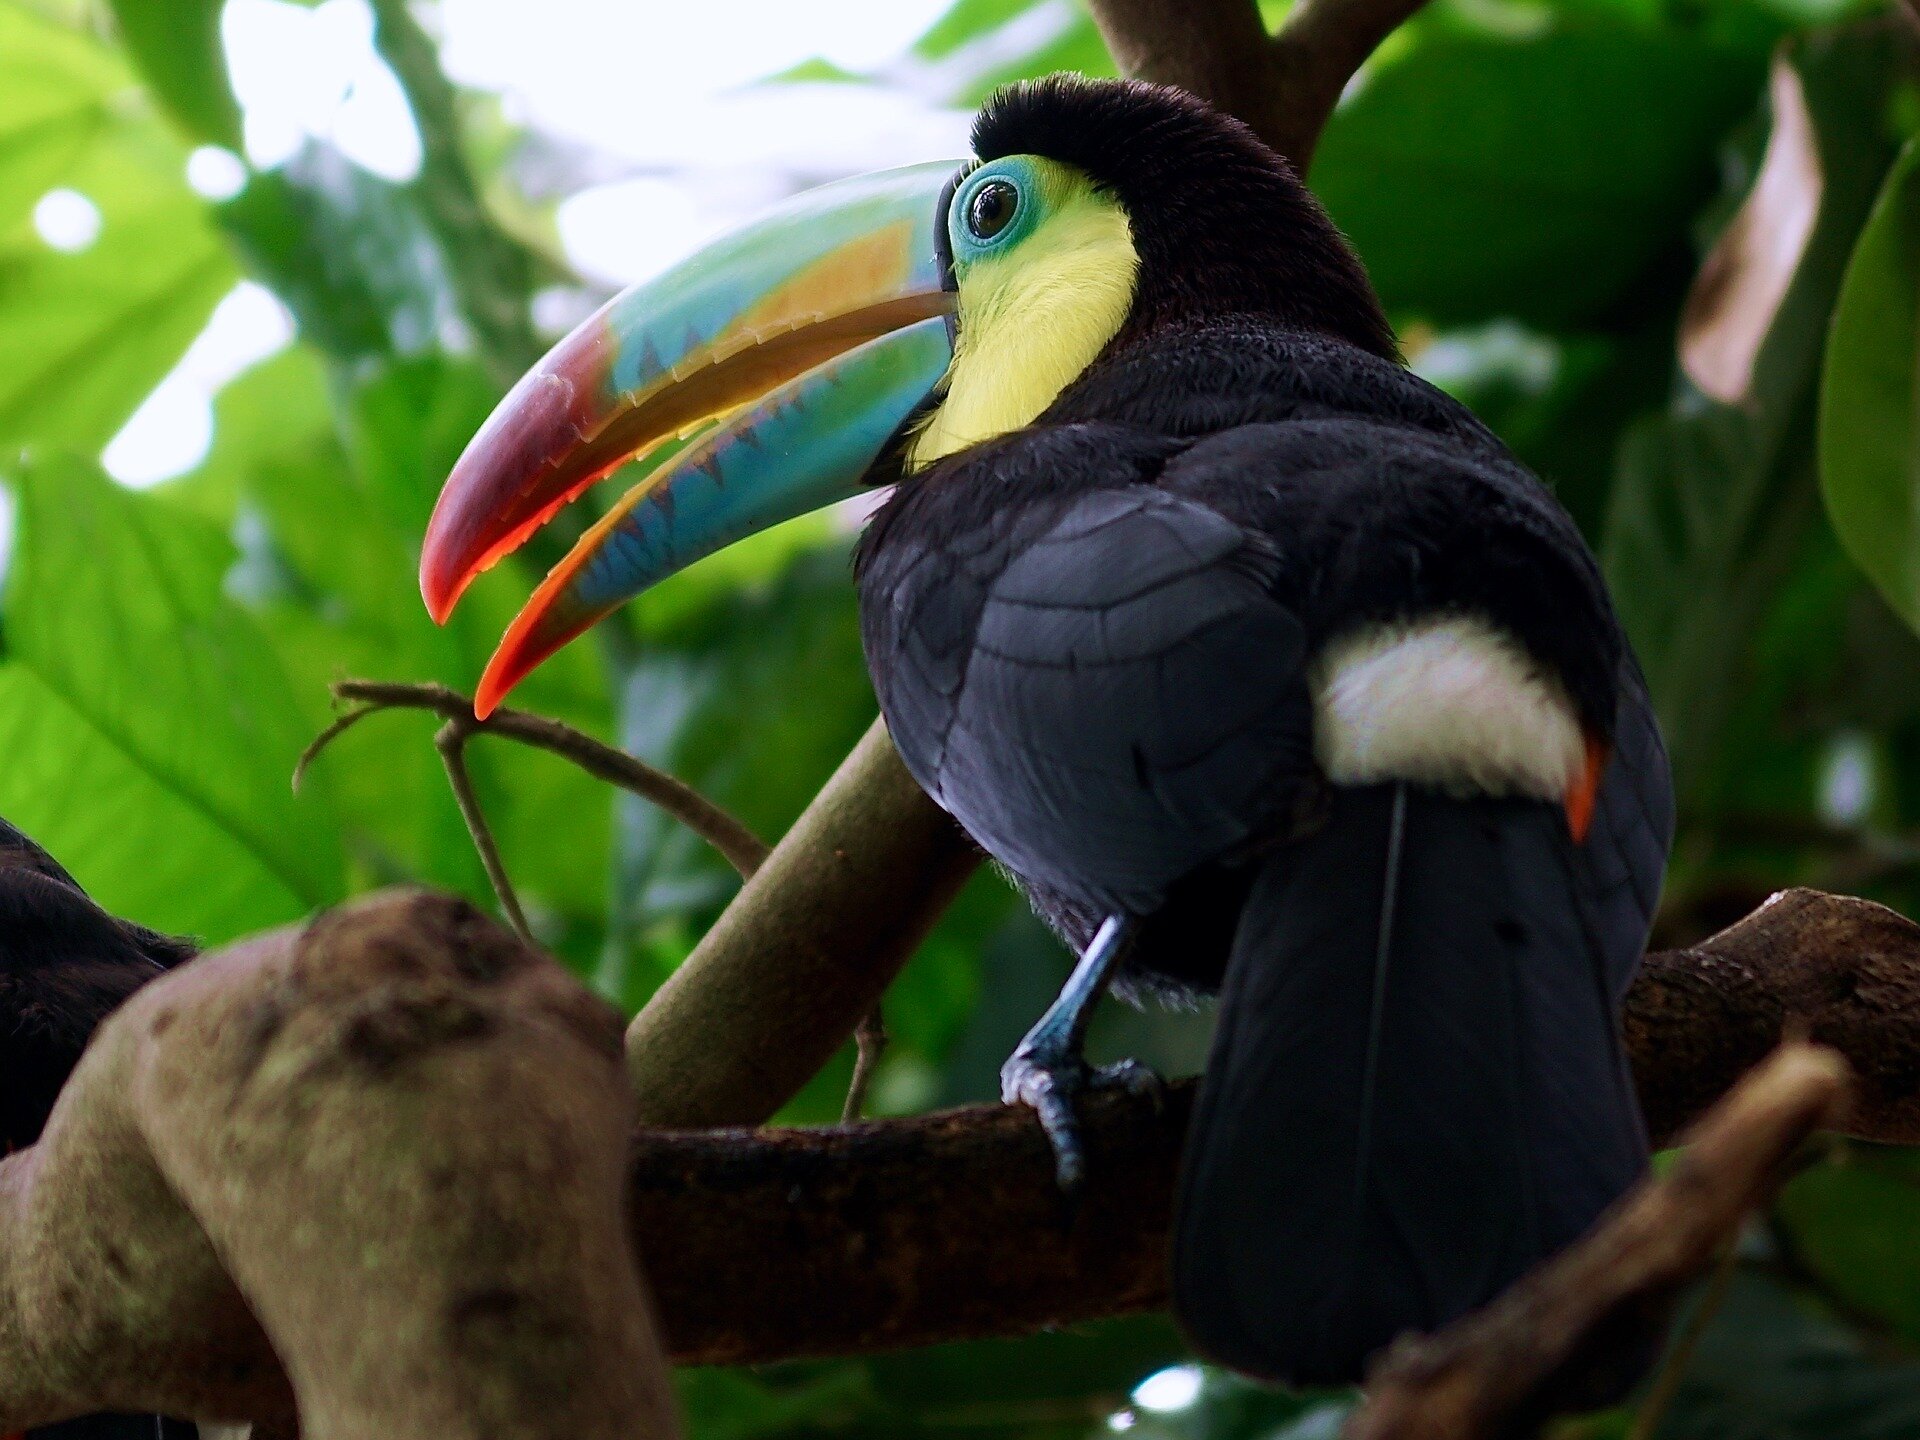 Tropical songbirds stop breeding to survive drought